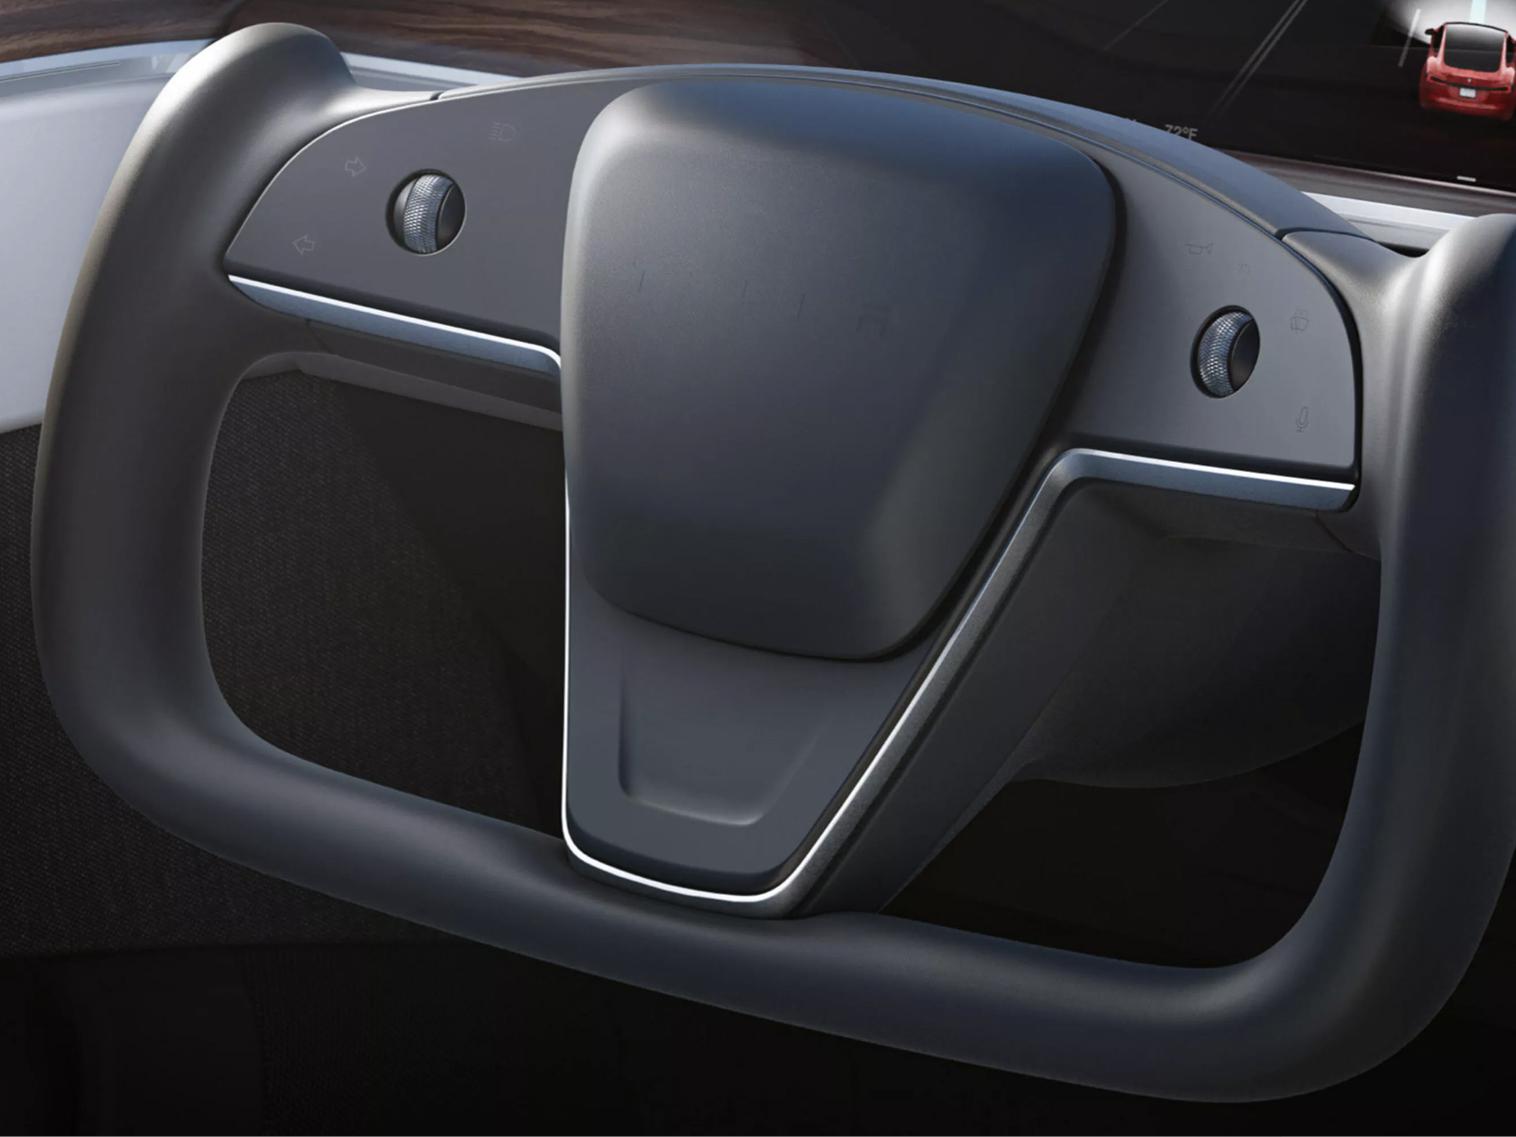 The new Tesla steering wheel design has raised eyebrows.